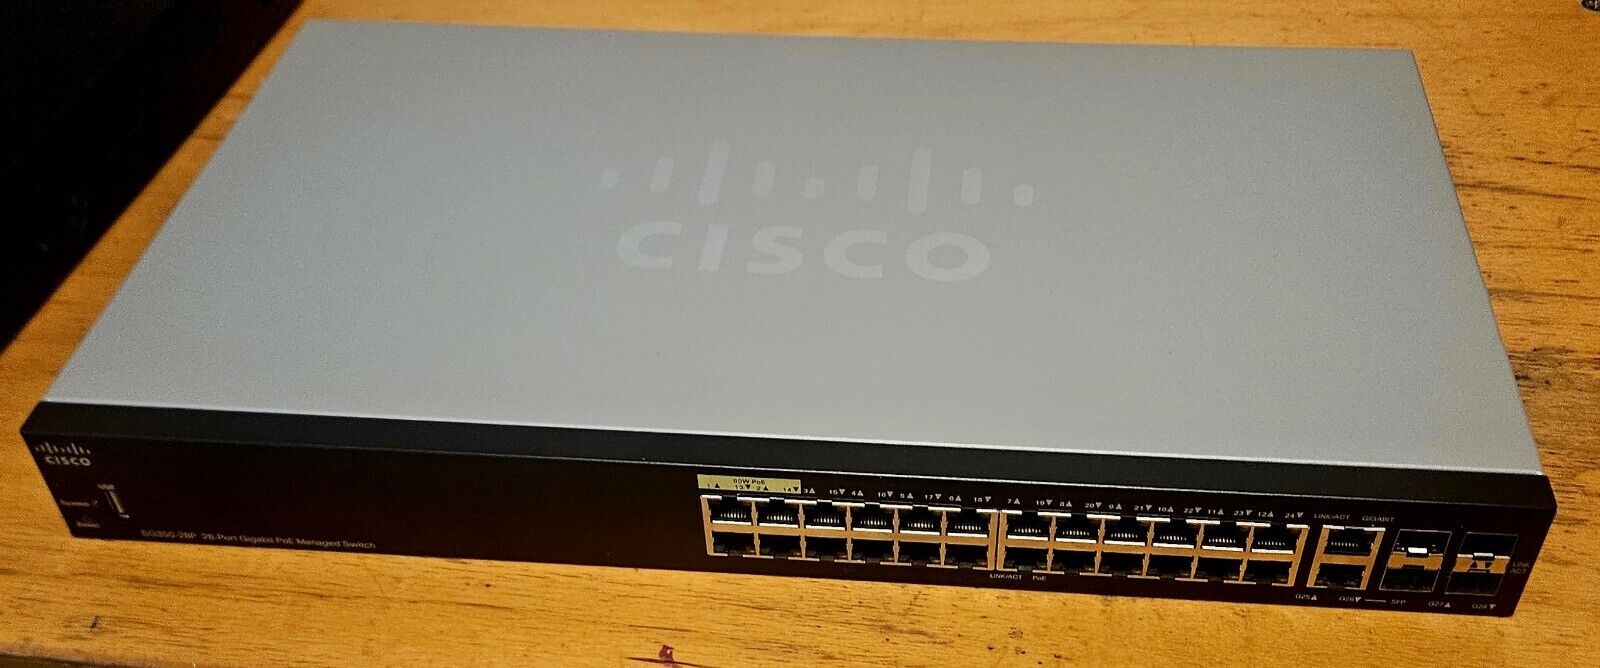 Cisco SG350-28P Gigabit 28-Port PoE Managed Ethernet Switch SG350-28P-K9 V04